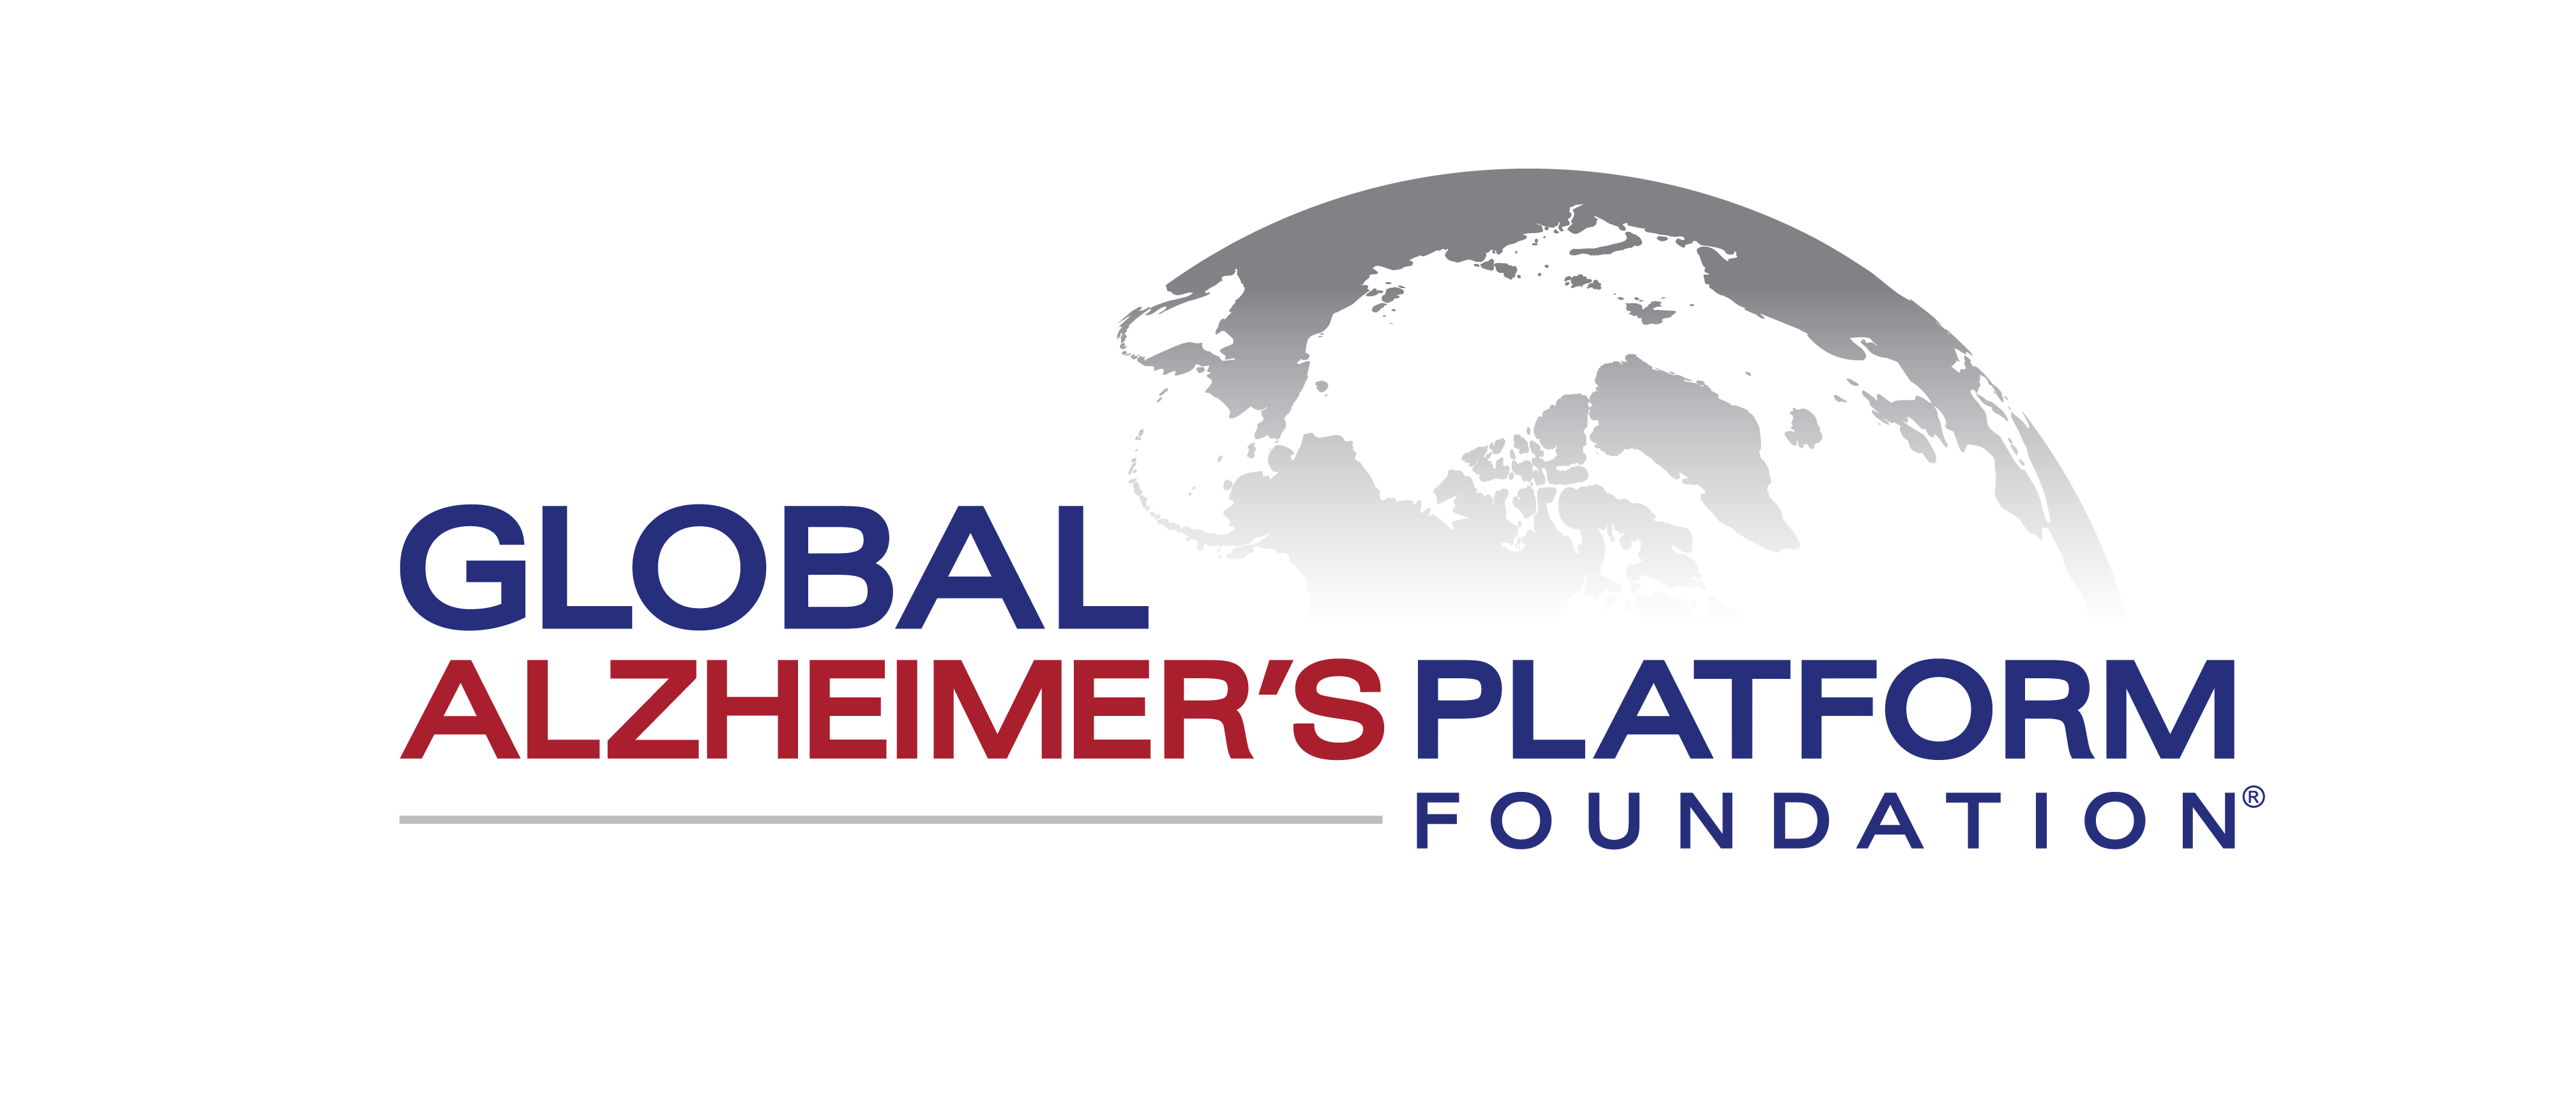 Global Alzheimer's Platform Foundation logo